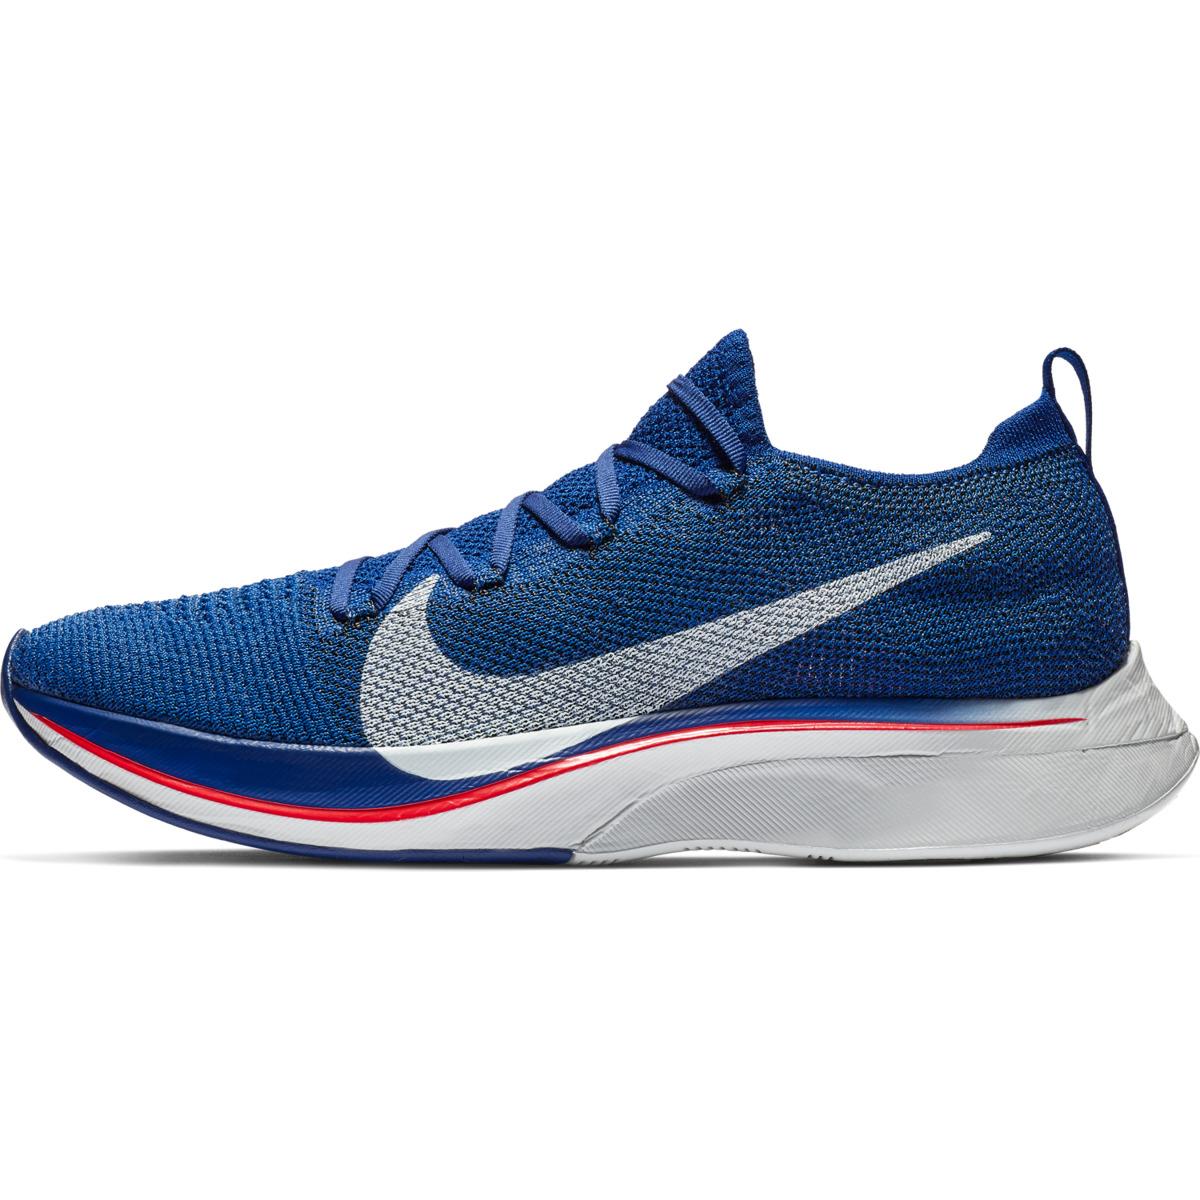 Nike Flyknit Vaporfly 4% Running Shoes in Blue for Men - Lyst